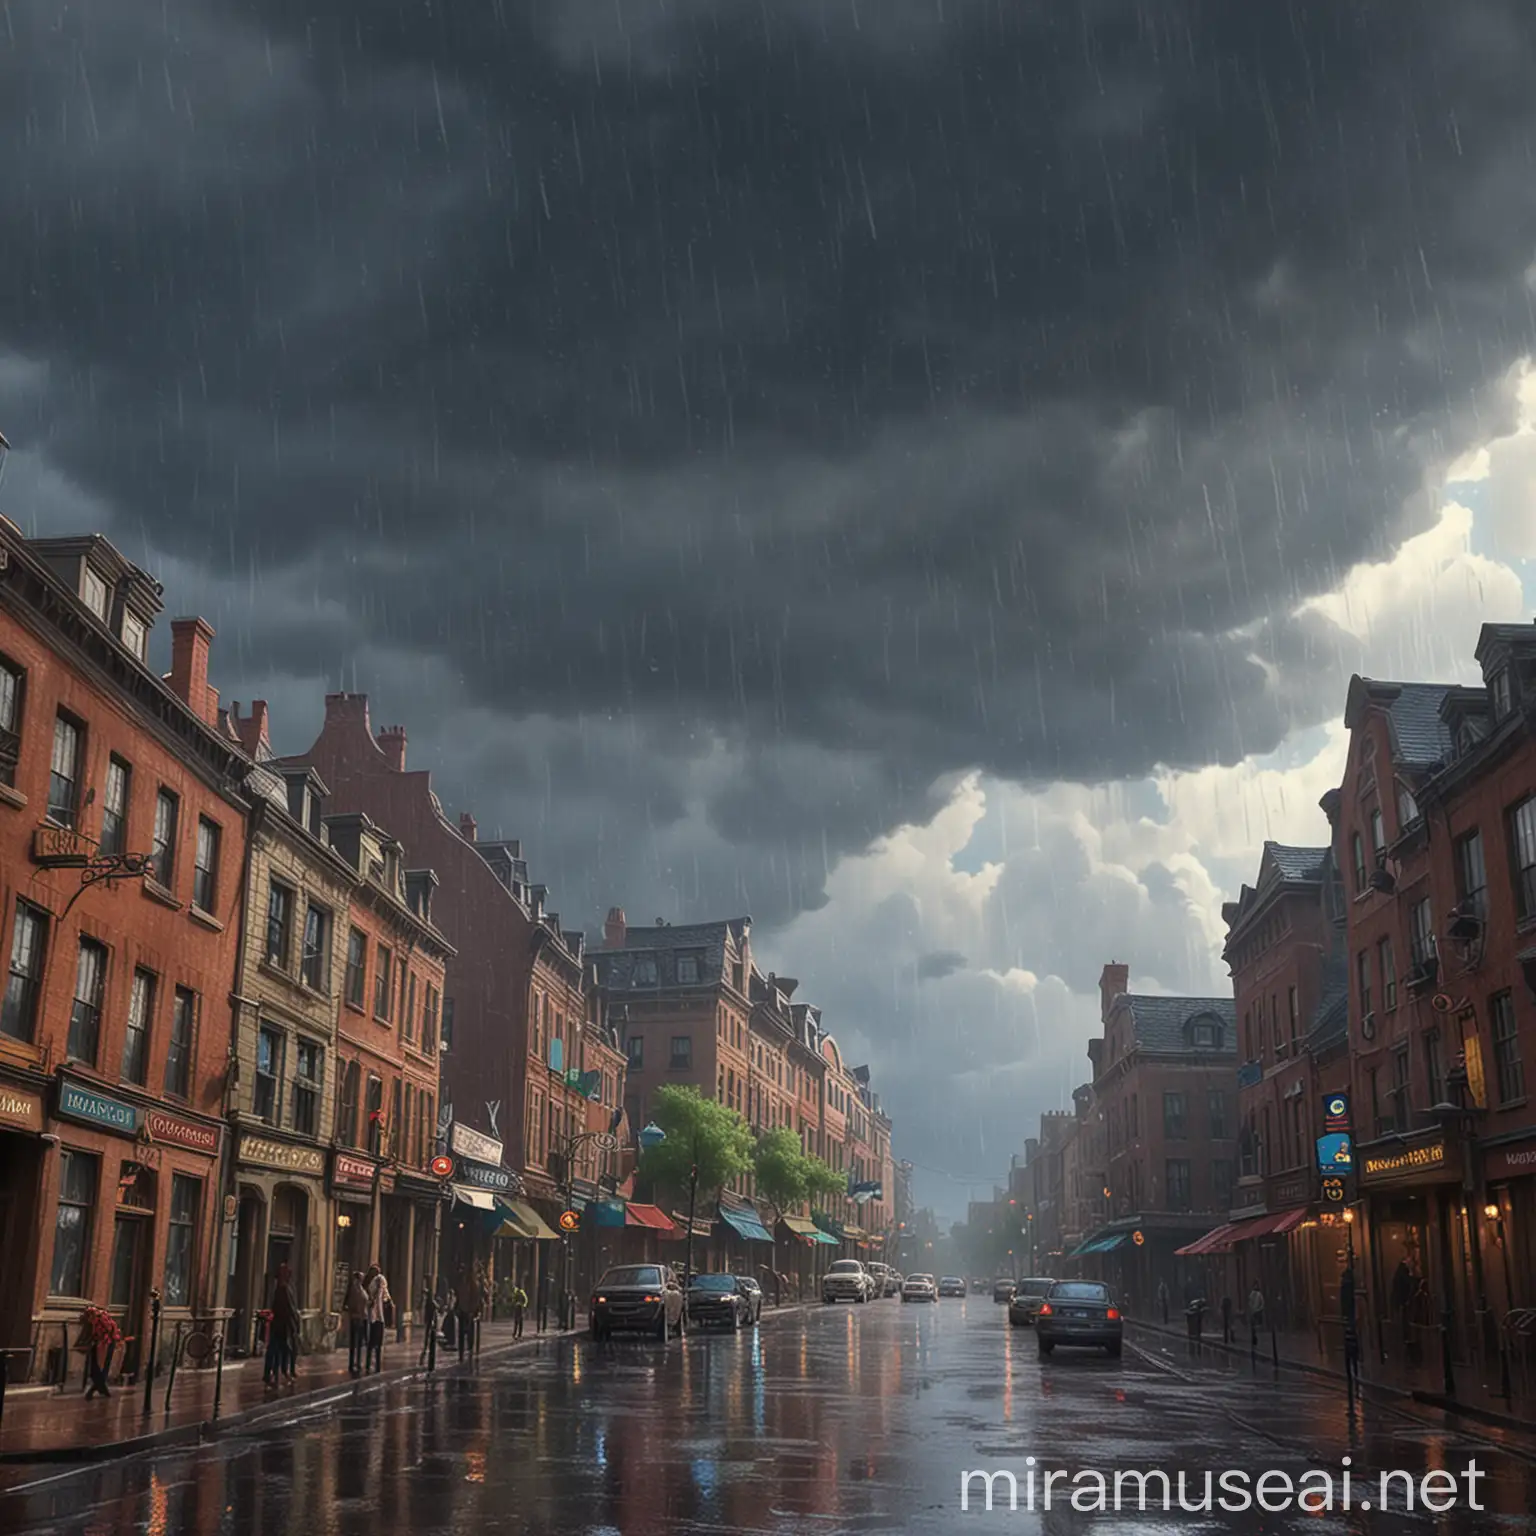 Heavy Rain in the Sky A PixarStyle Scene